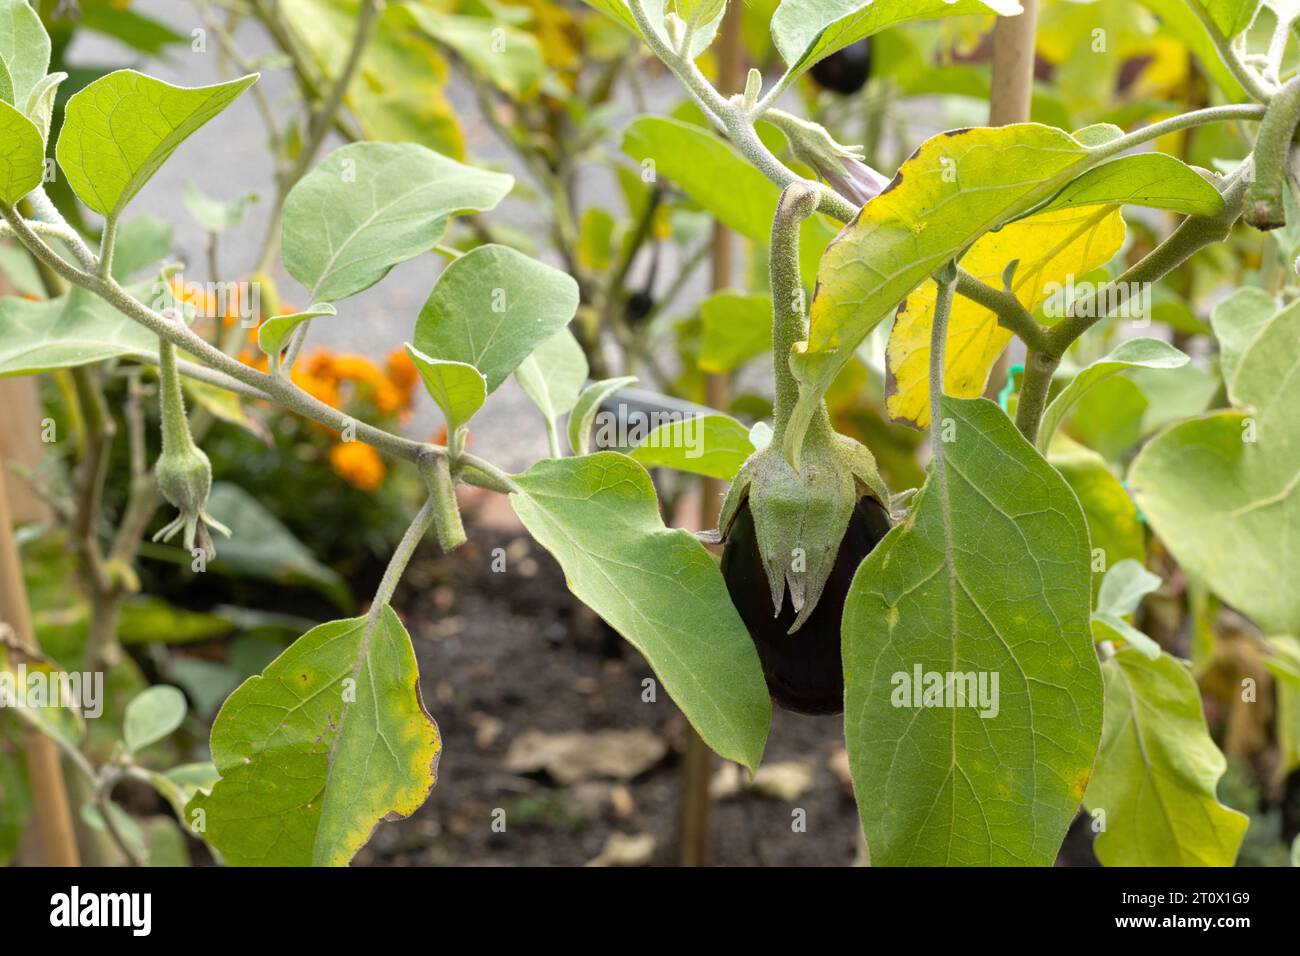 Solanum melongena 'Michal' eggplant growing in a garden. Stock Photo